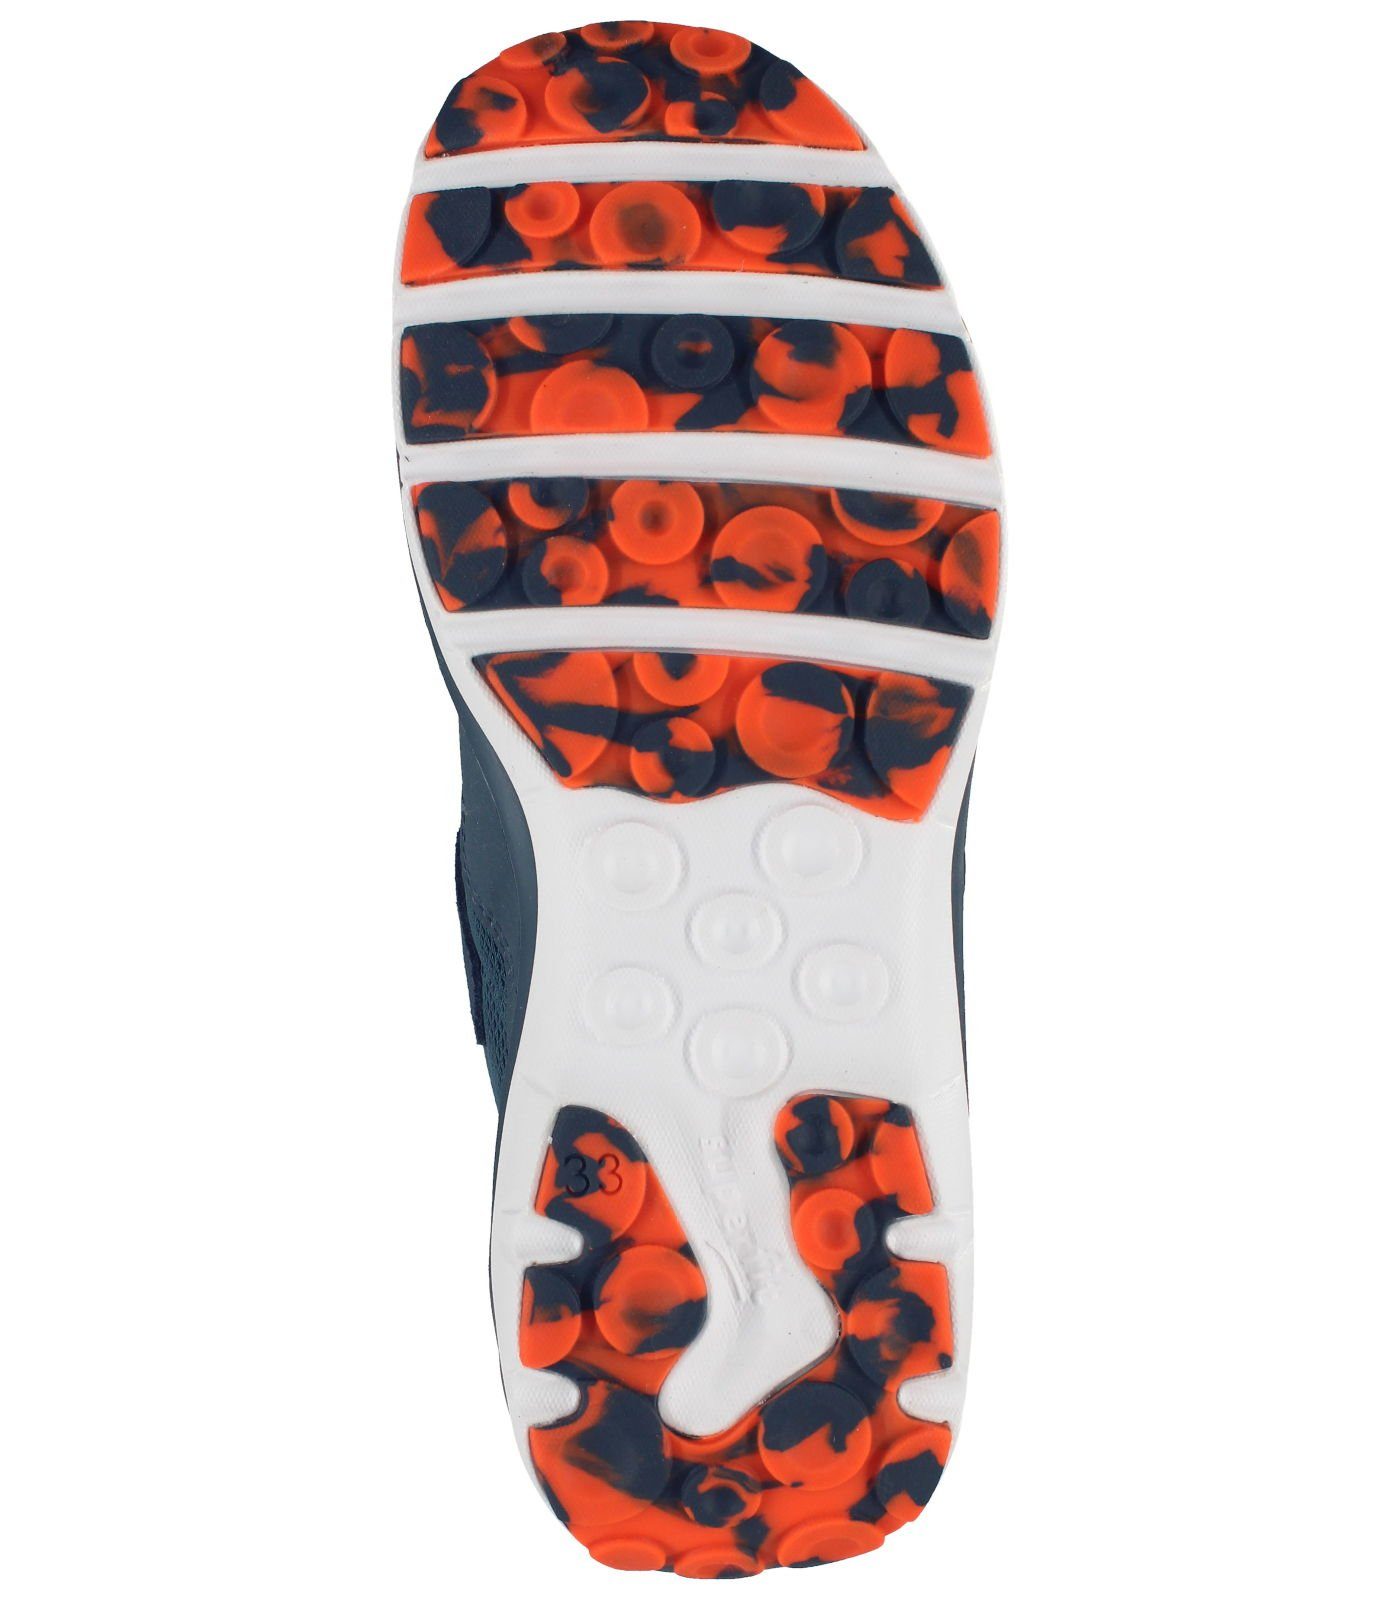 Lederimitat/Textil Sneaker Sneaker blau/orange Superfit